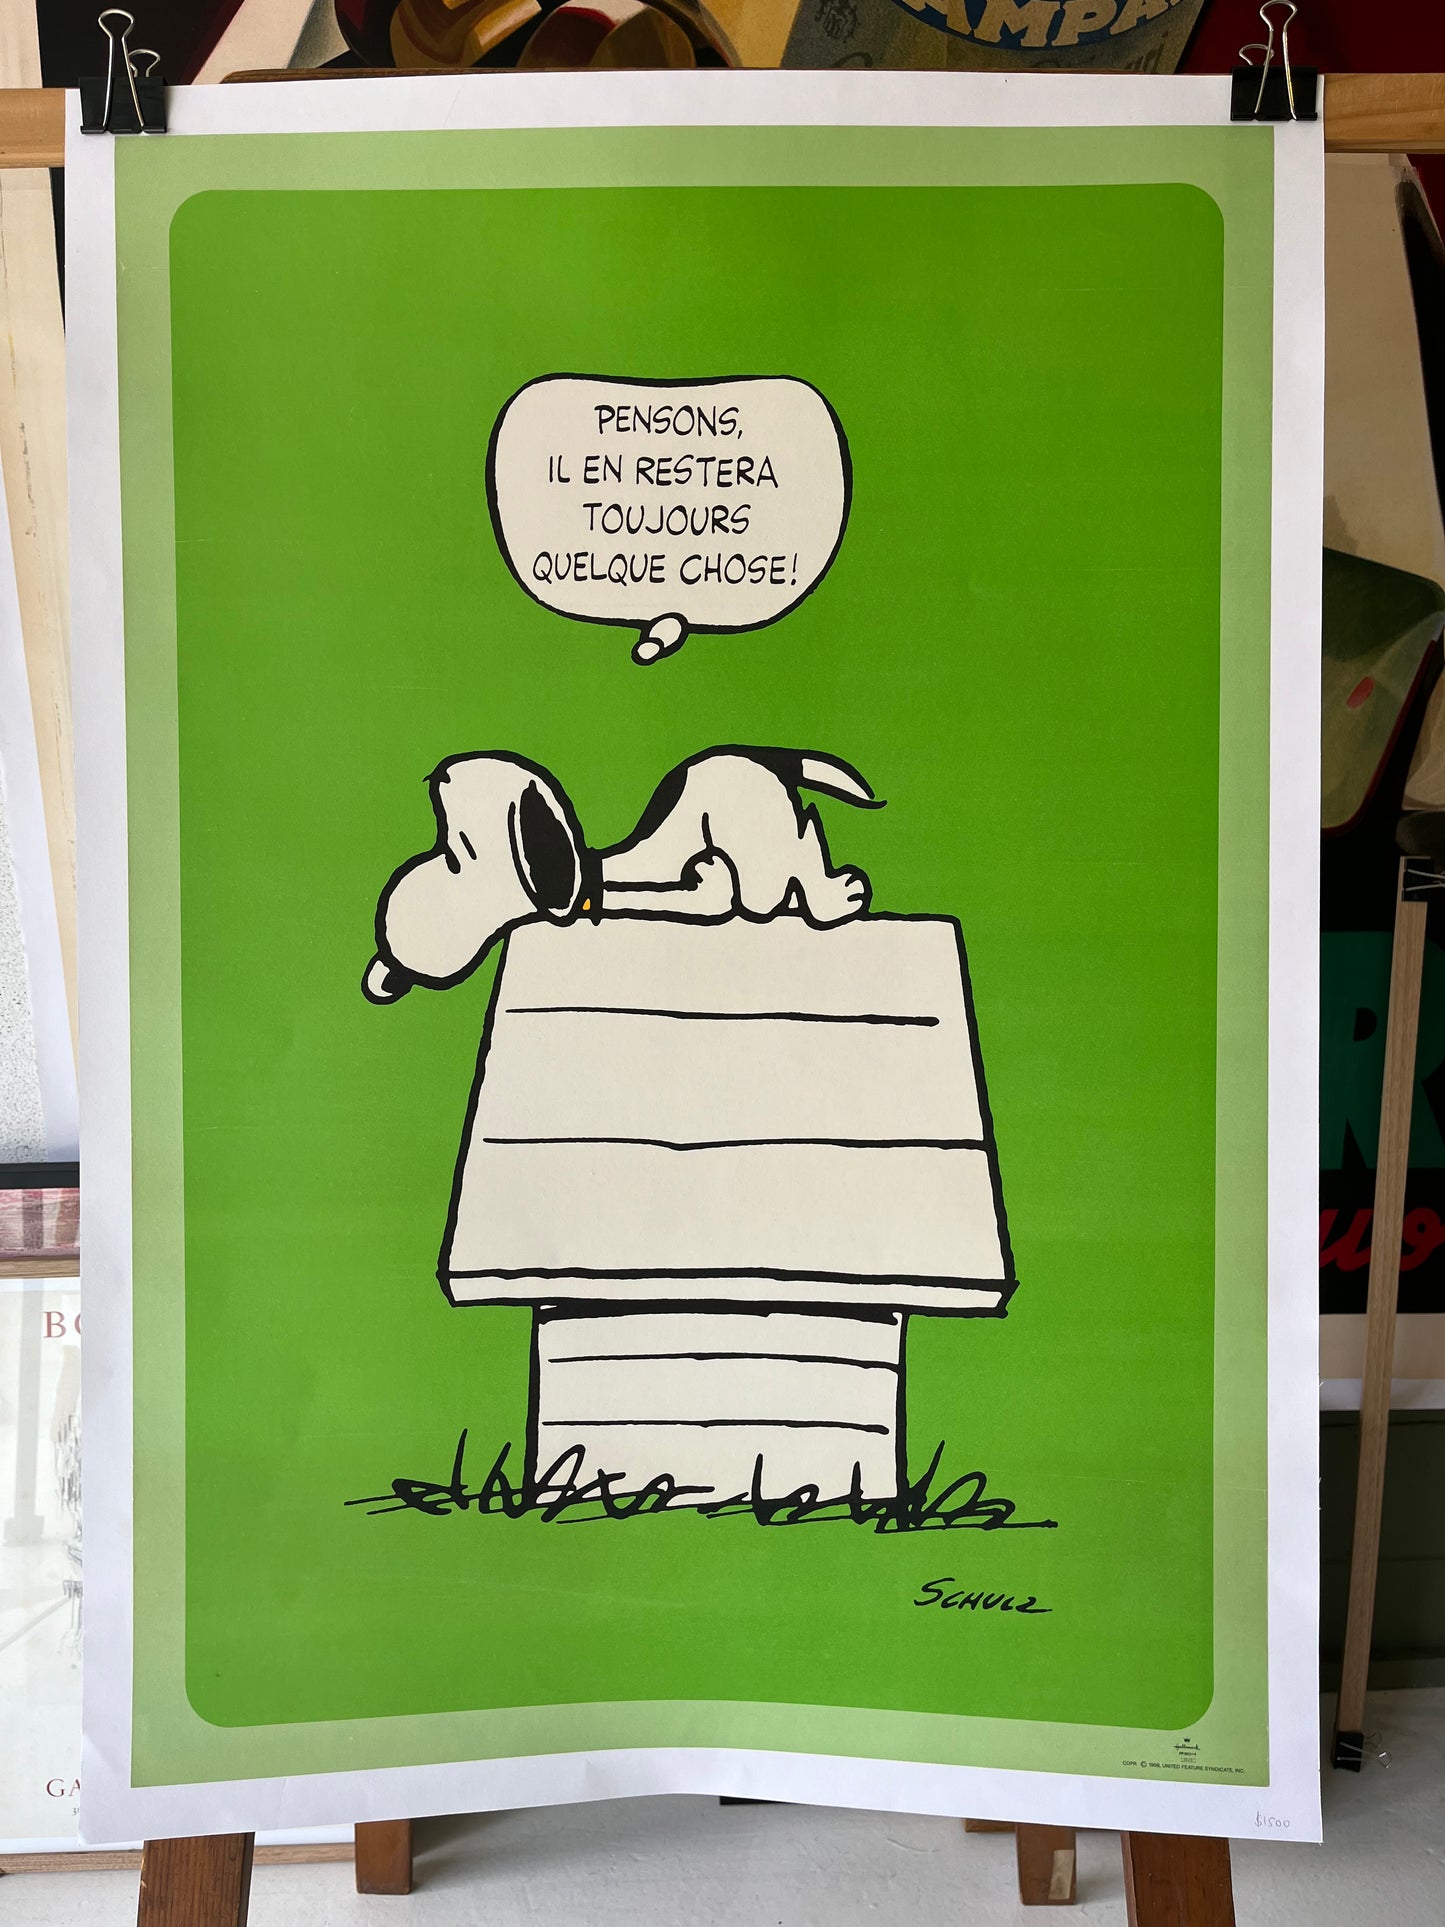 Snoopy by Schulz